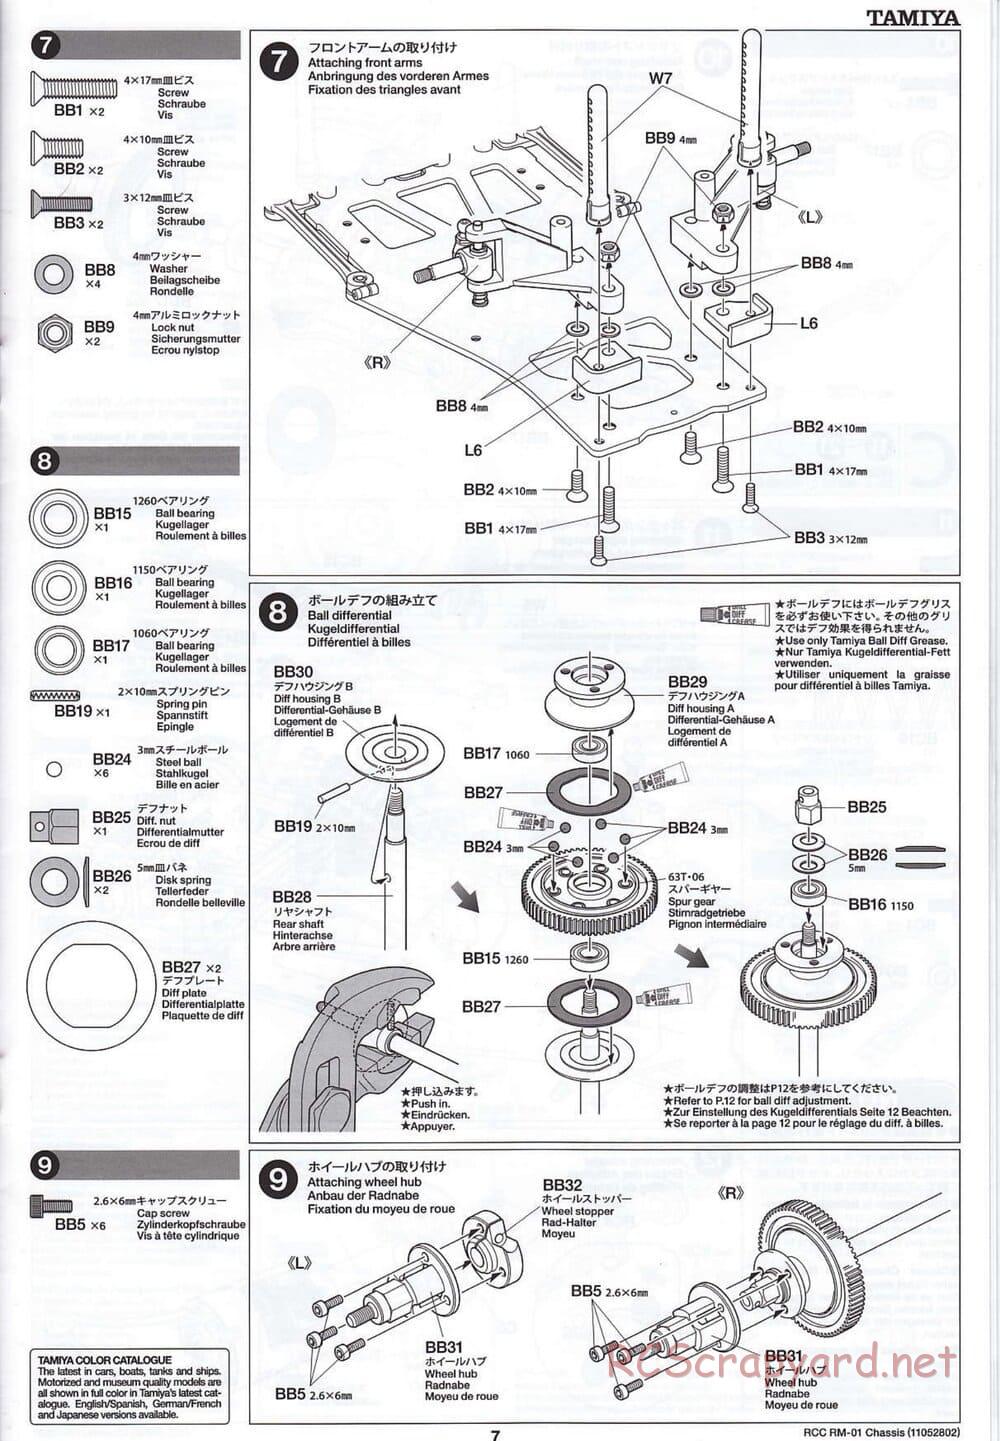 Tamiya - RM-01 Chassis - Manual - Page 7